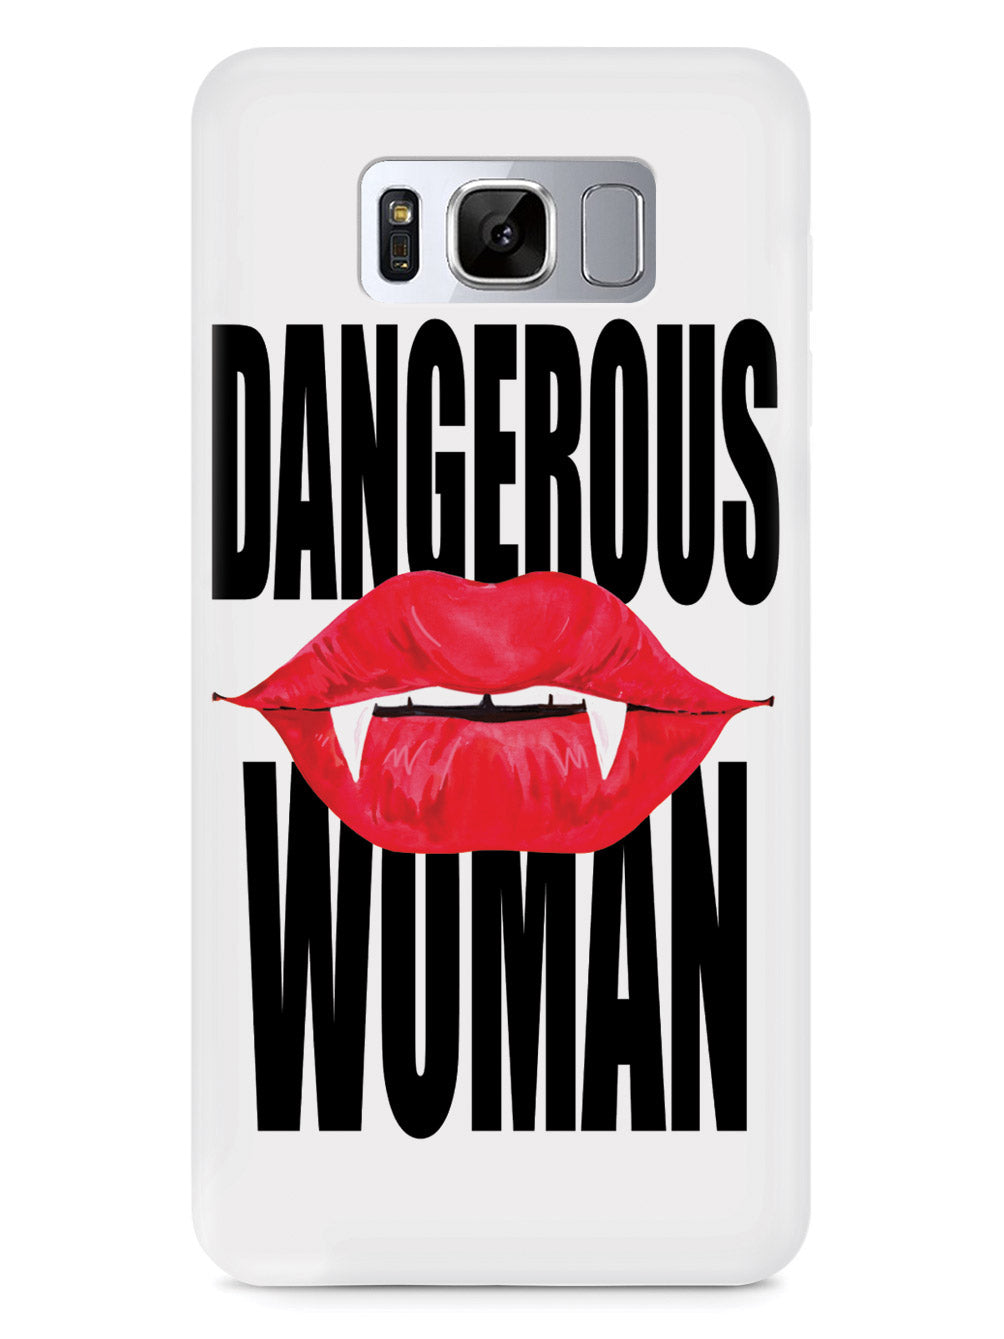 Dangerous Woman - Vampire Fangs - White Case